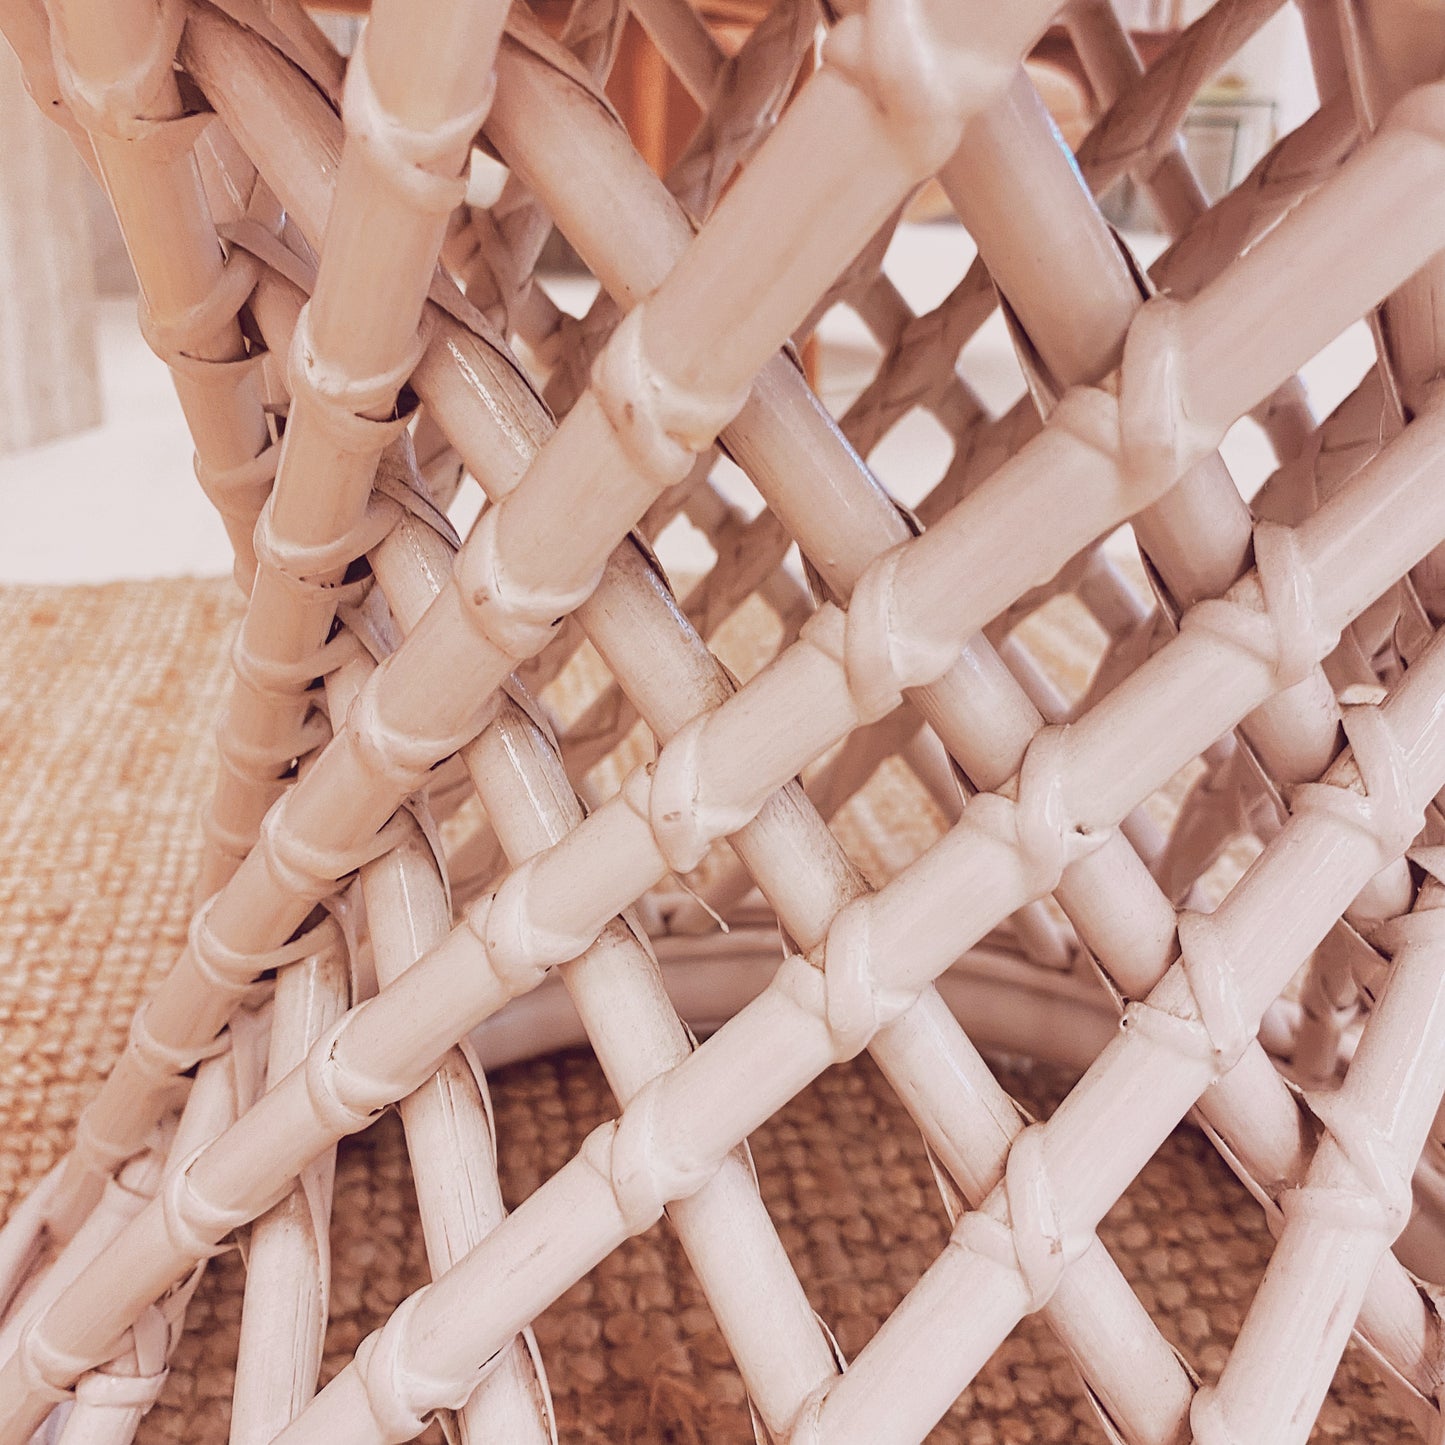 White rattan & bamboo stool